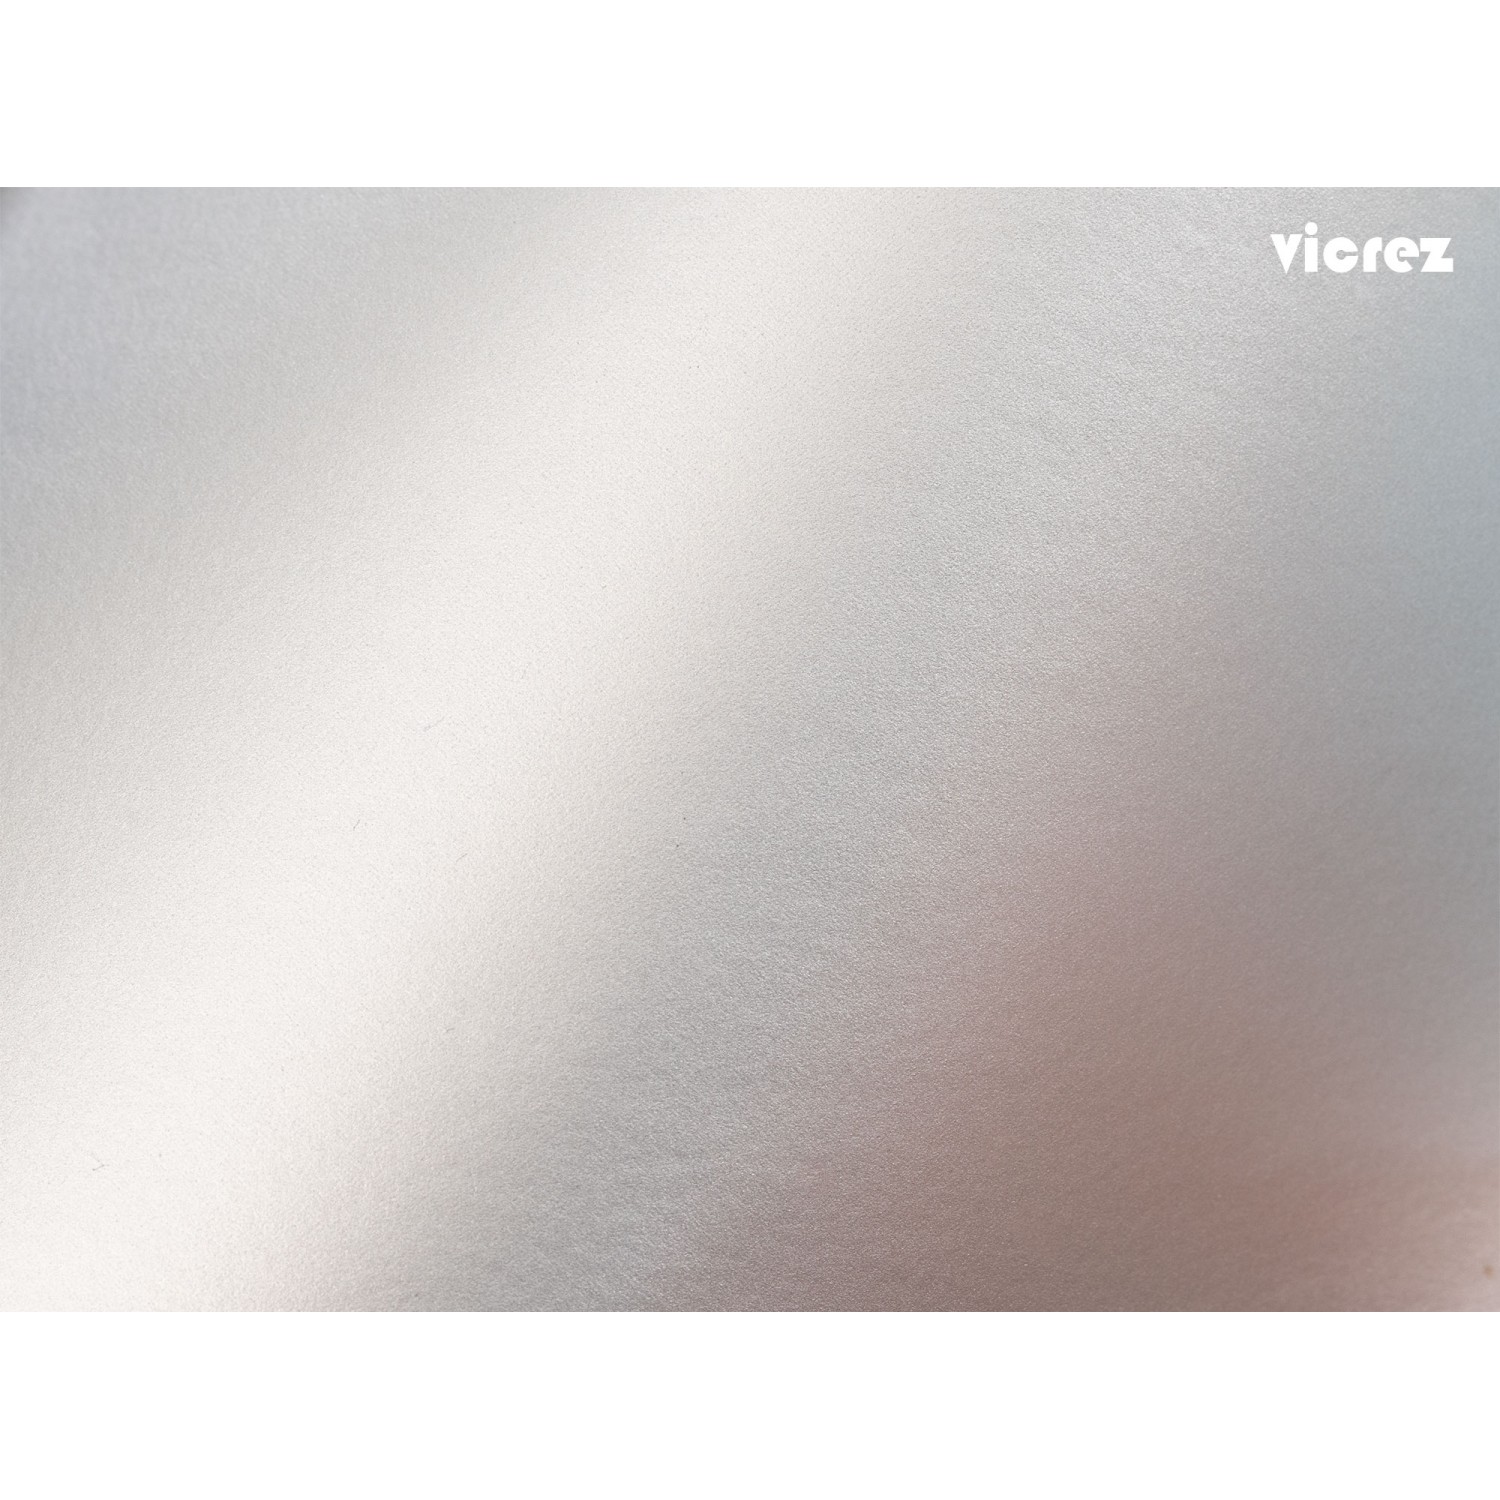 Vicrez Vinyl Car Wrap Film vzv10131 Chrome Satin Gold